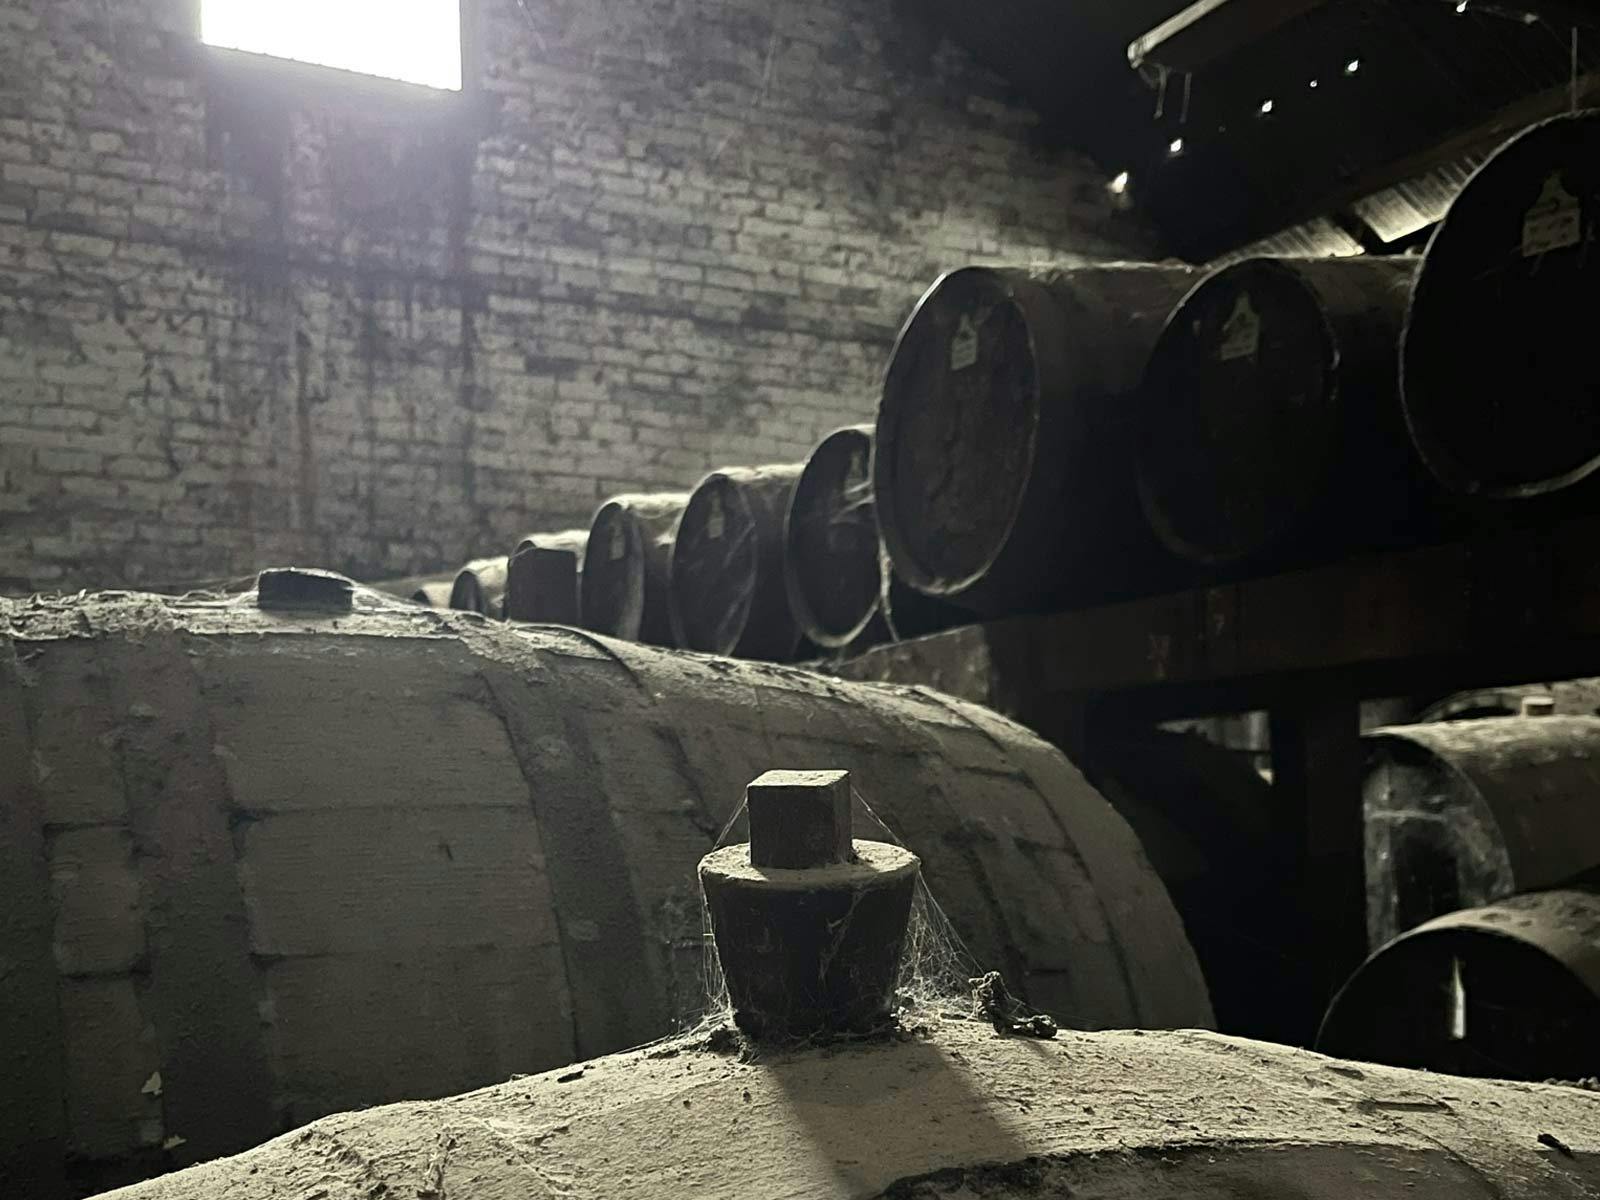 Wine barrels in a darkend cellar with light shining through a single window